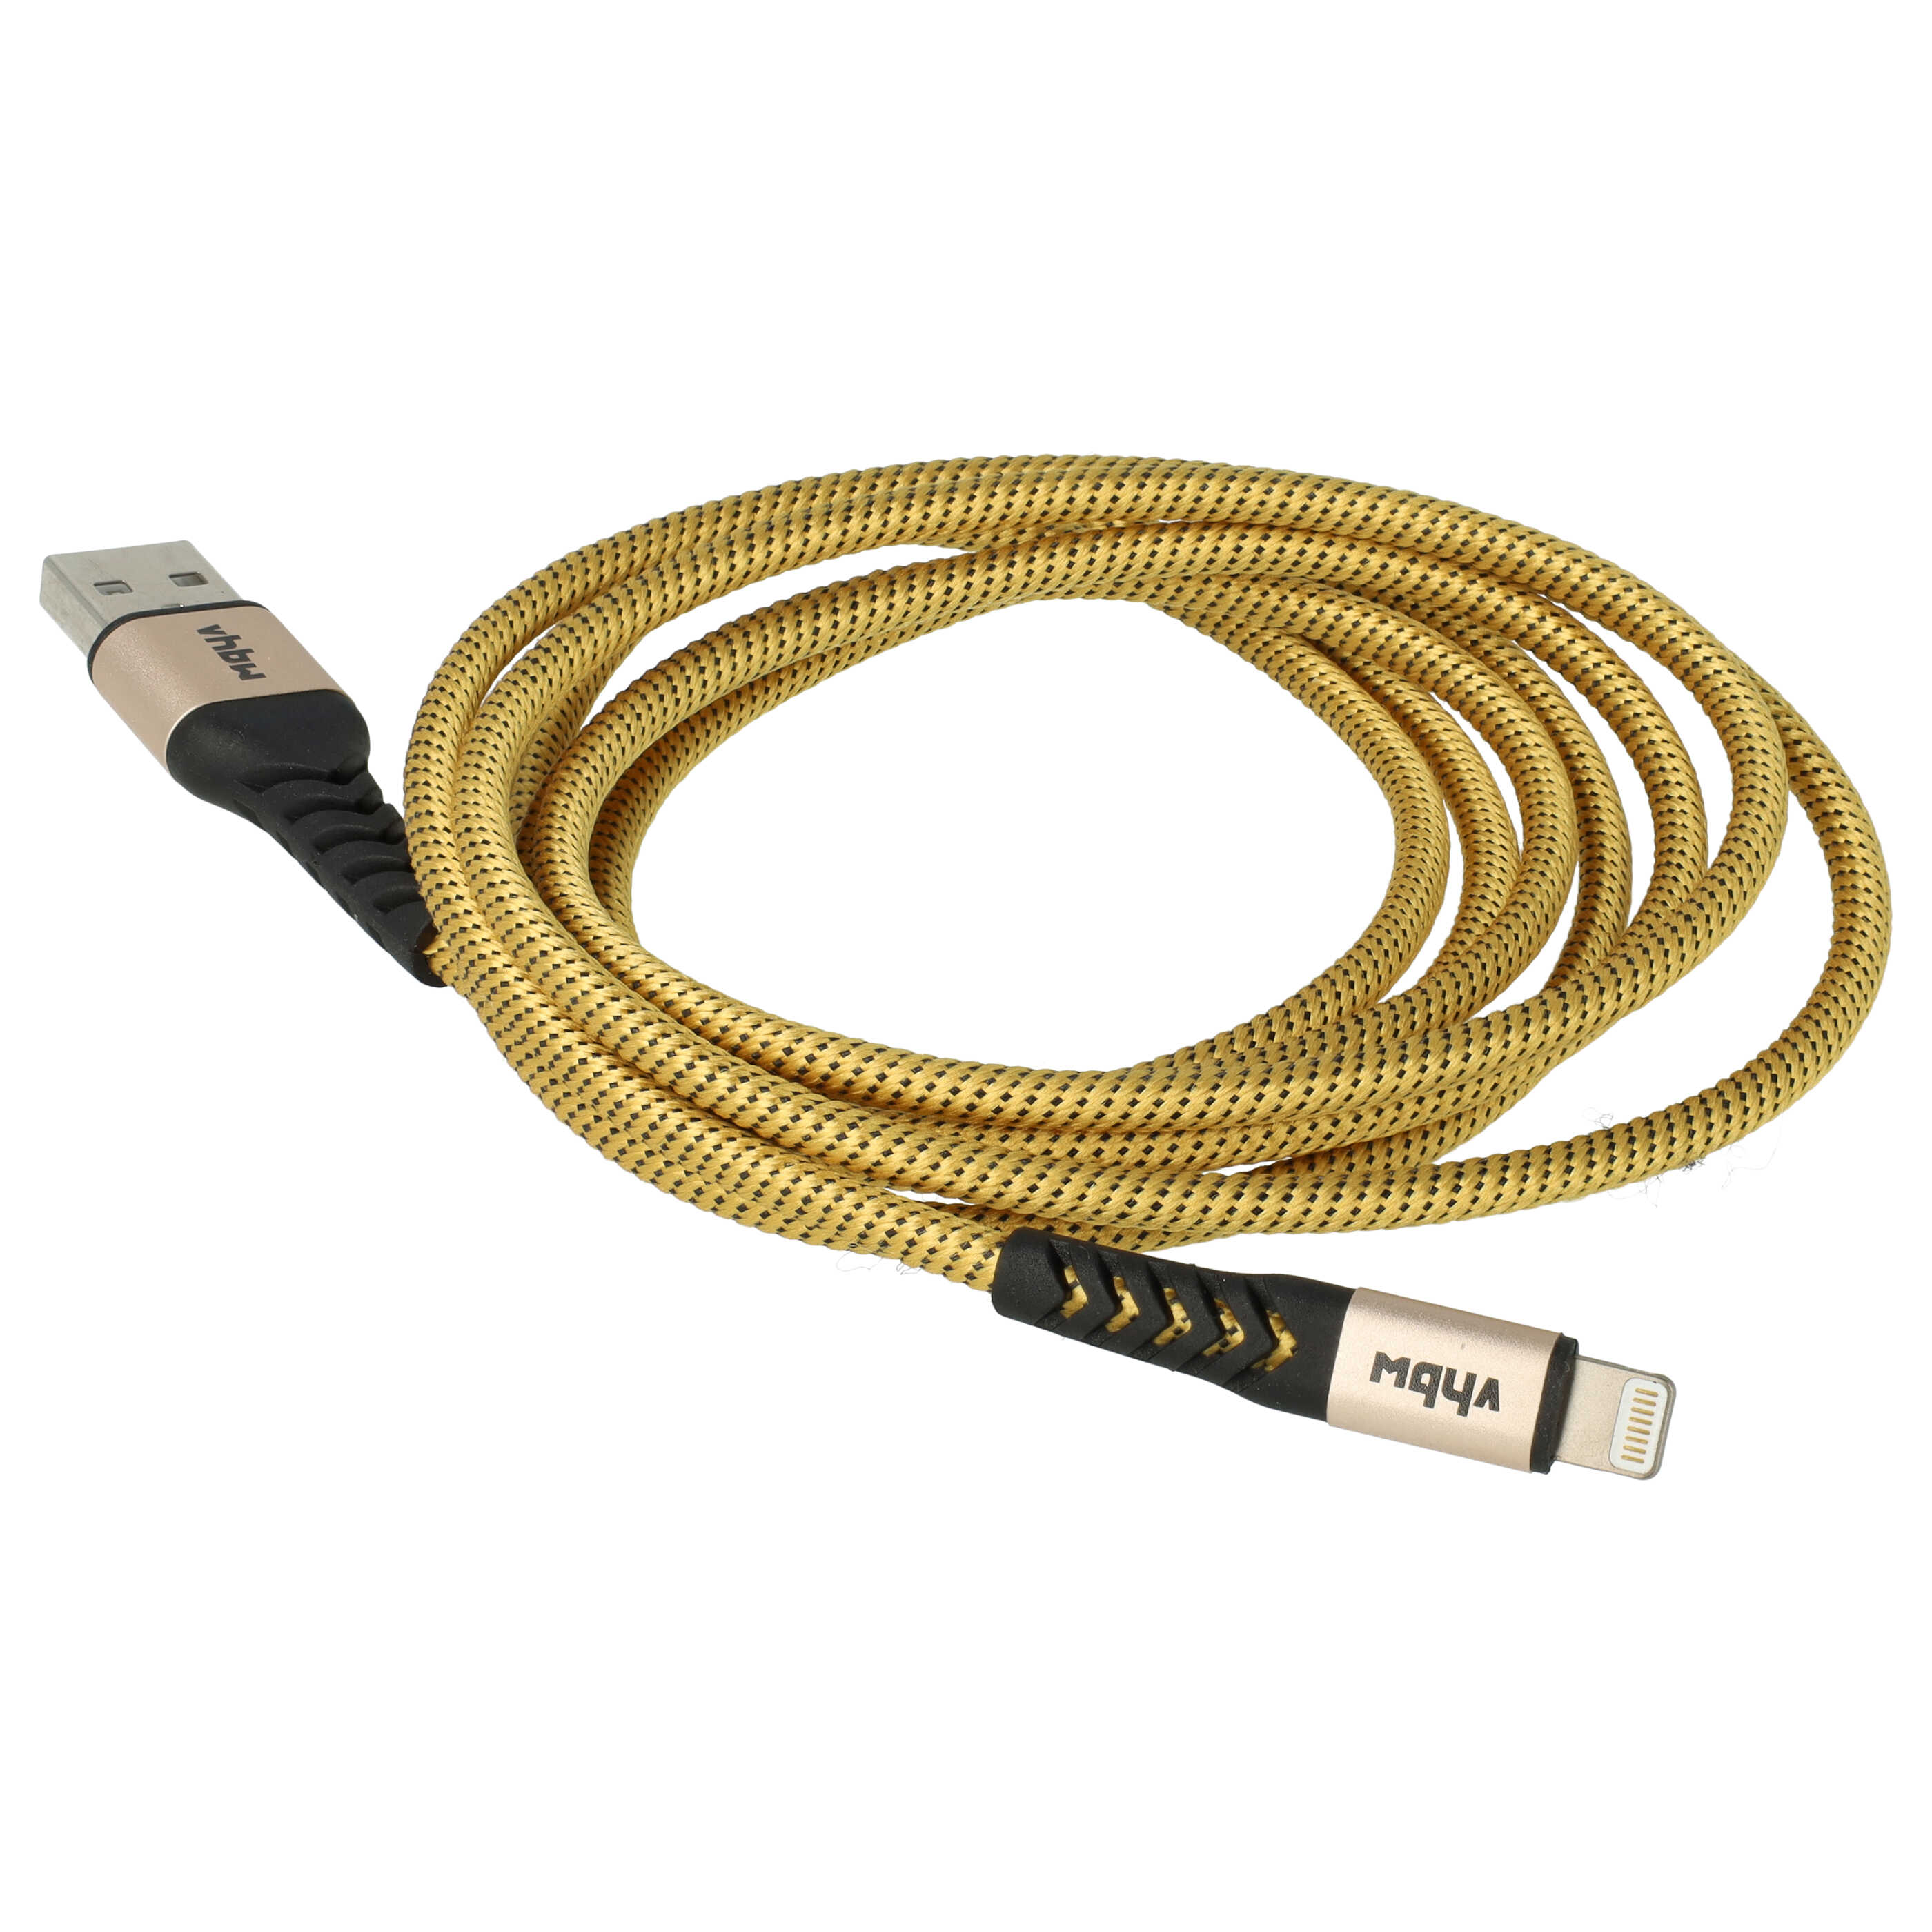 Cavo lightning - USB A per dispositivi Apple iOS - nero / giallo, 180cm